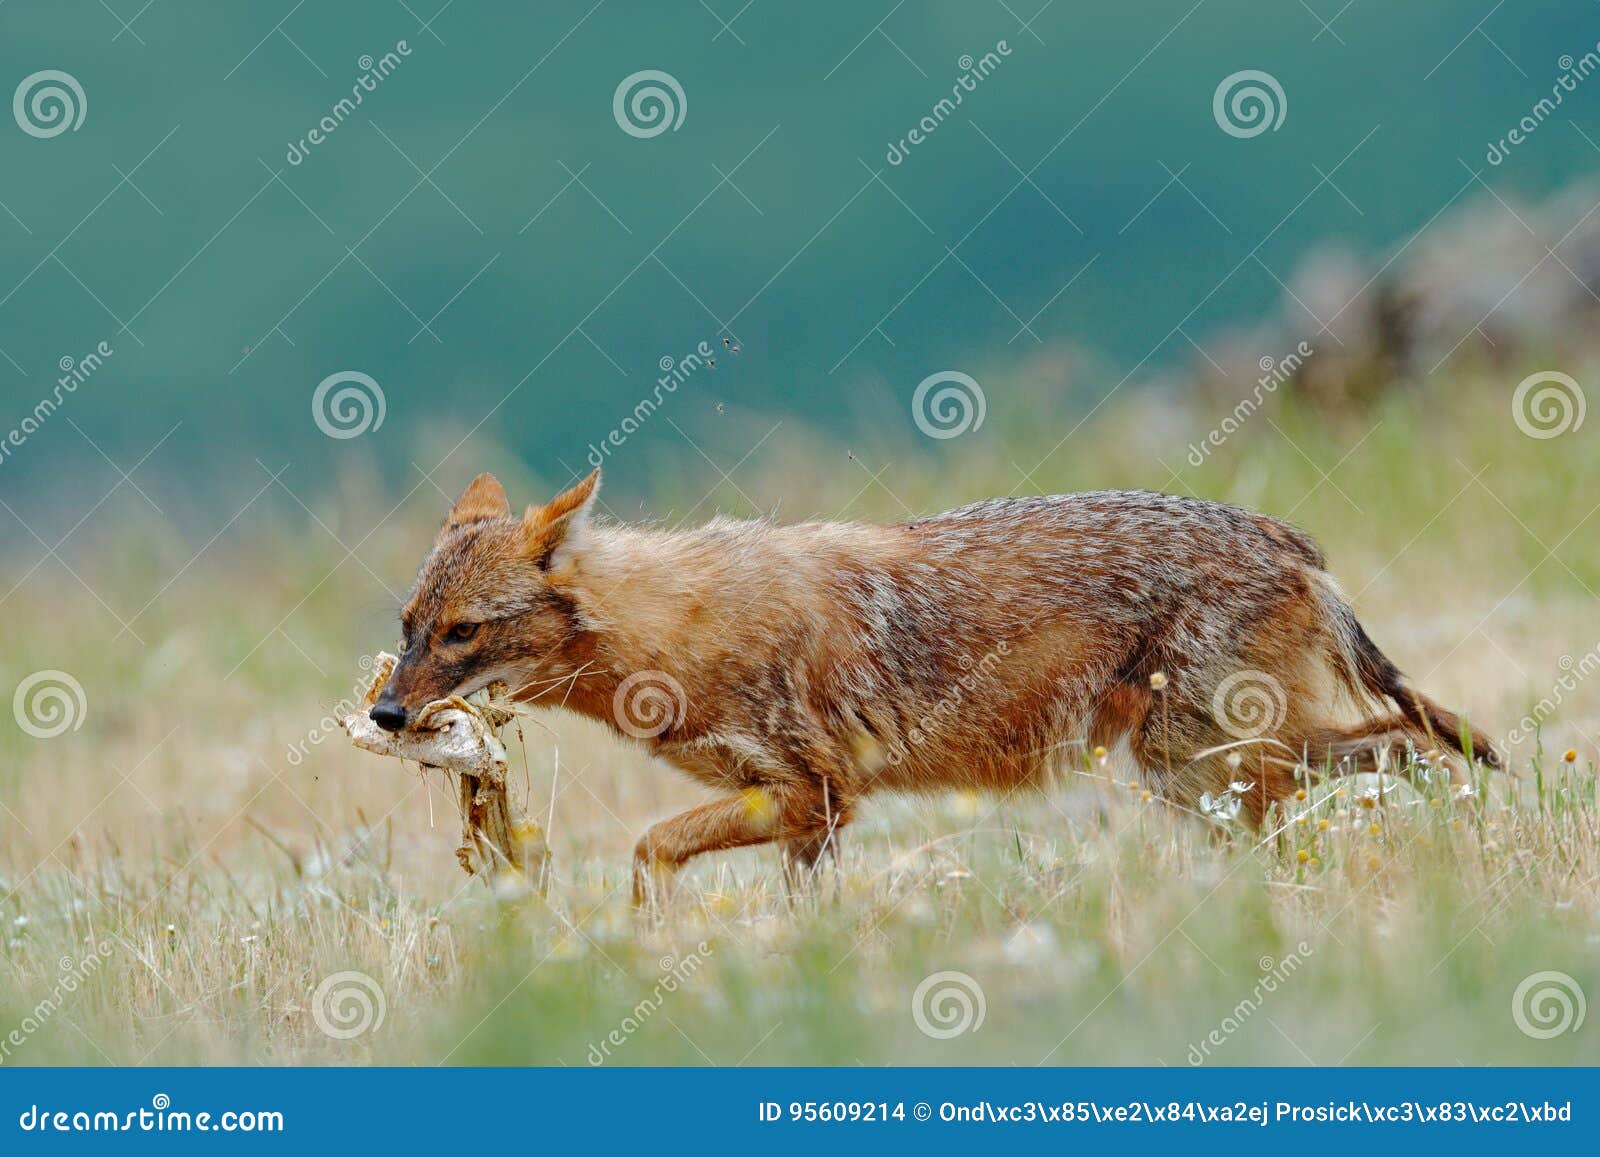 golden jackal, canis aureus, feeding scene with meadow, madzharovo, eastern rhodopes, bulgaria. wildlife balkan. wild dog behaviou